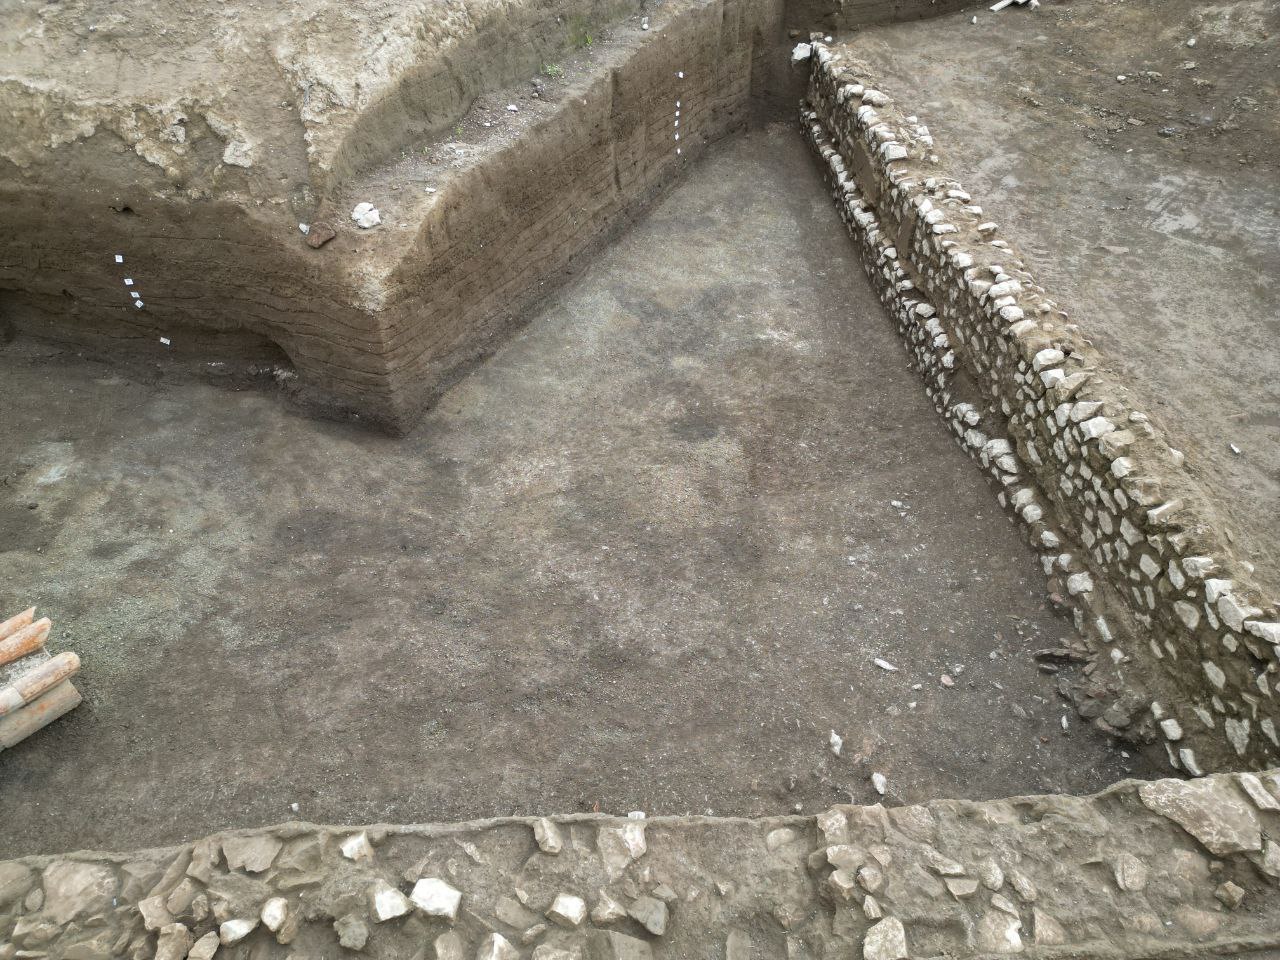 Nuove scoperte a Nuceria Alfaterna, grazie a indagini archeologiche preventive: agricoltura, strade, abitazioni e sepolture